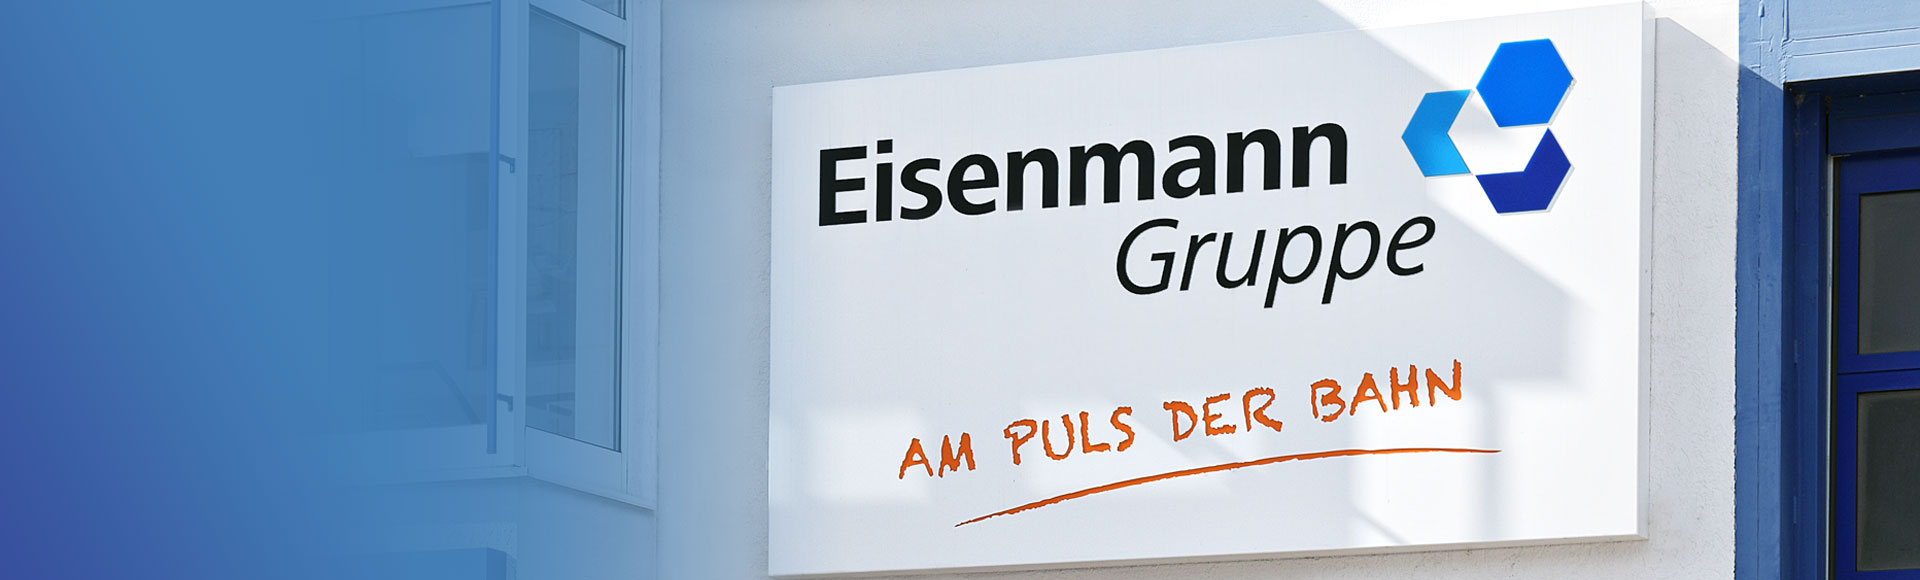 VH Planungsbüro - Eisenmann Gruppe